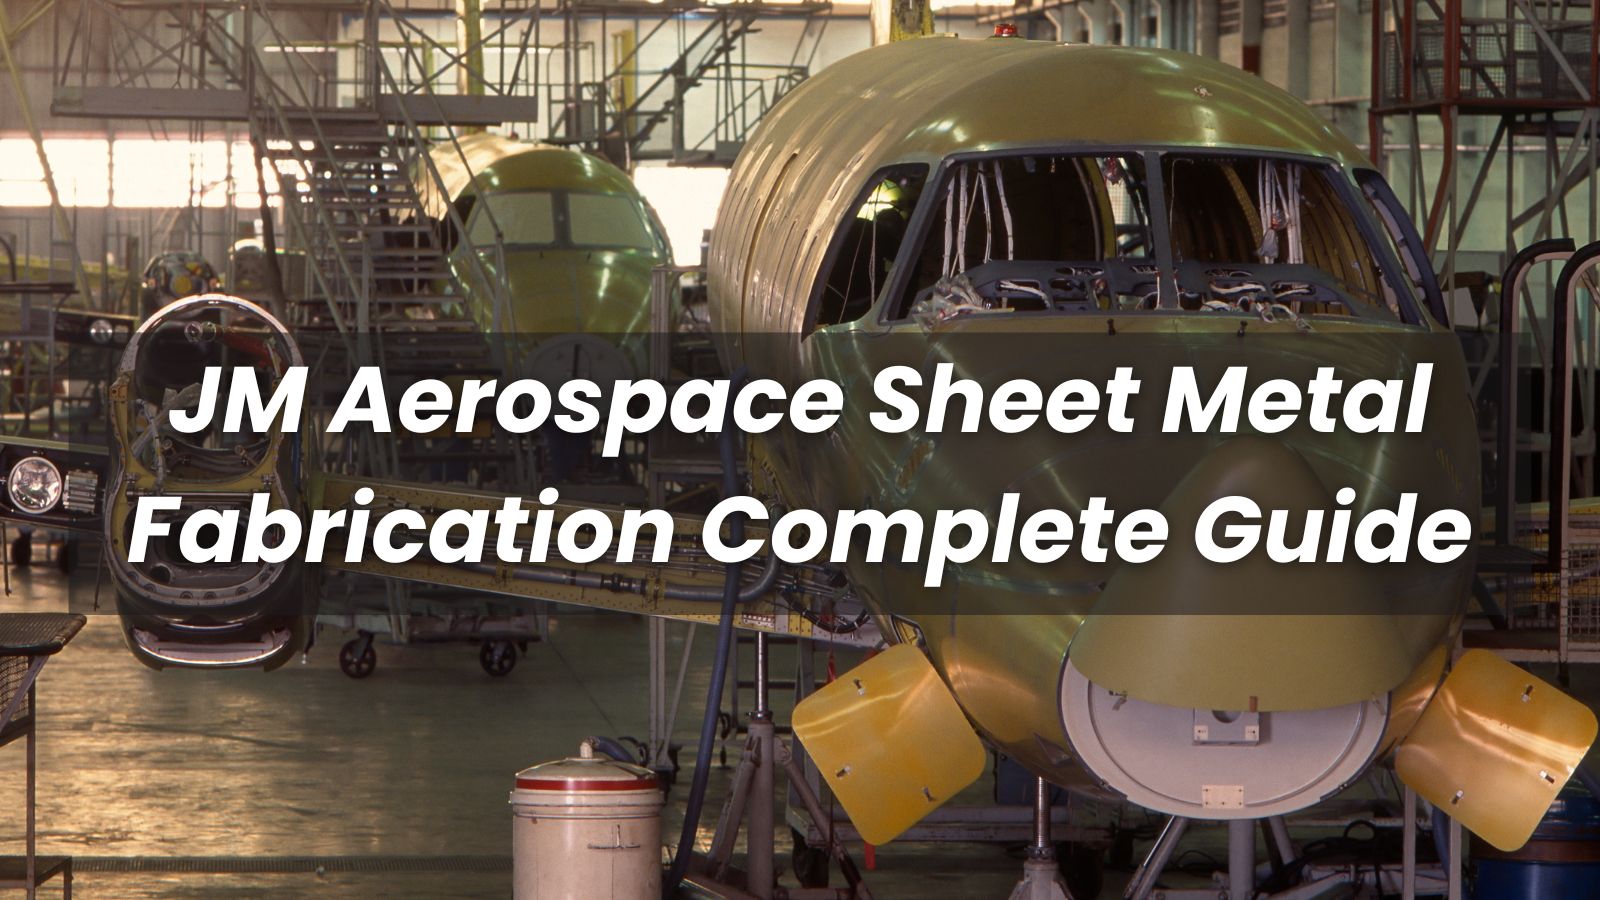 JM Aerospace Sheet Metal Fabrication Complete Guide